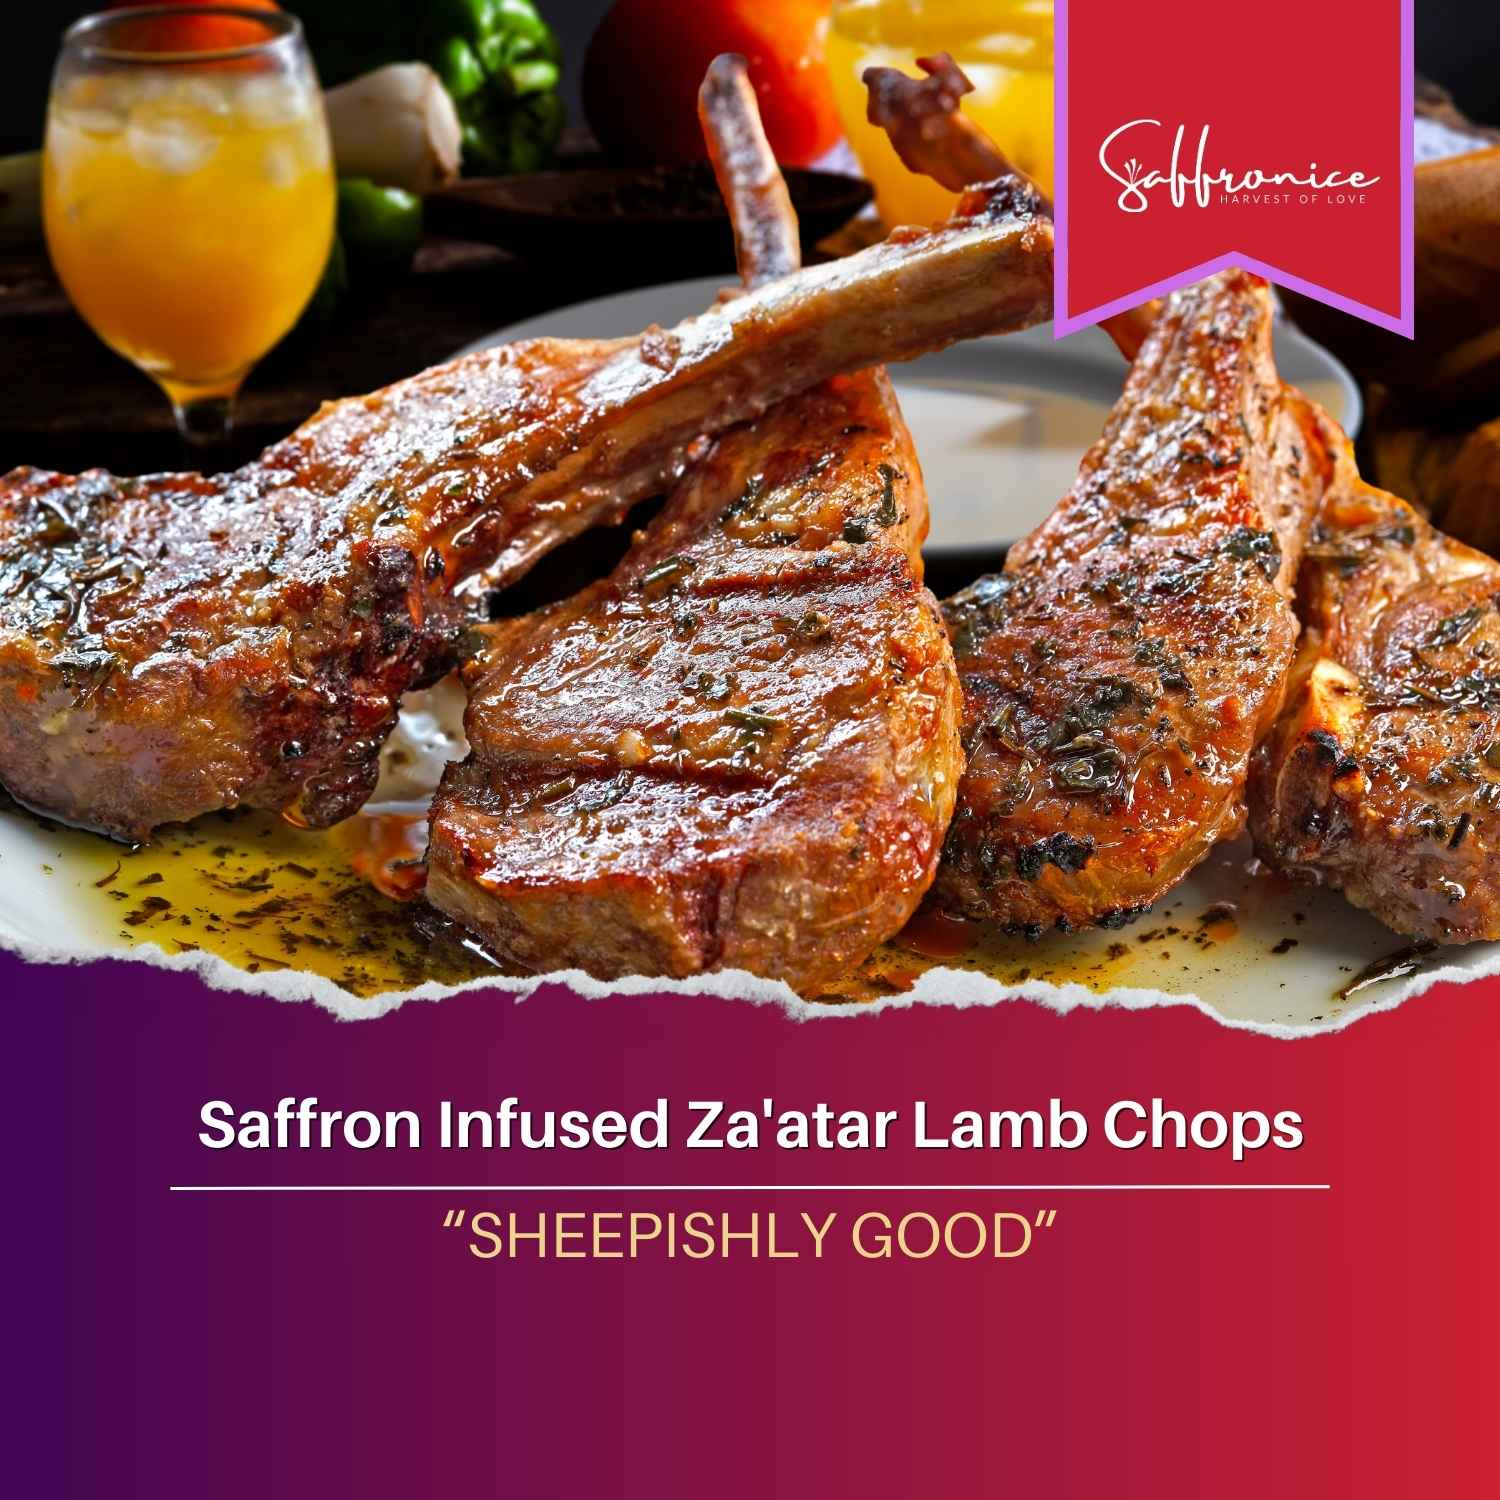 Lamb chops spiced with Saffronice Za'atar